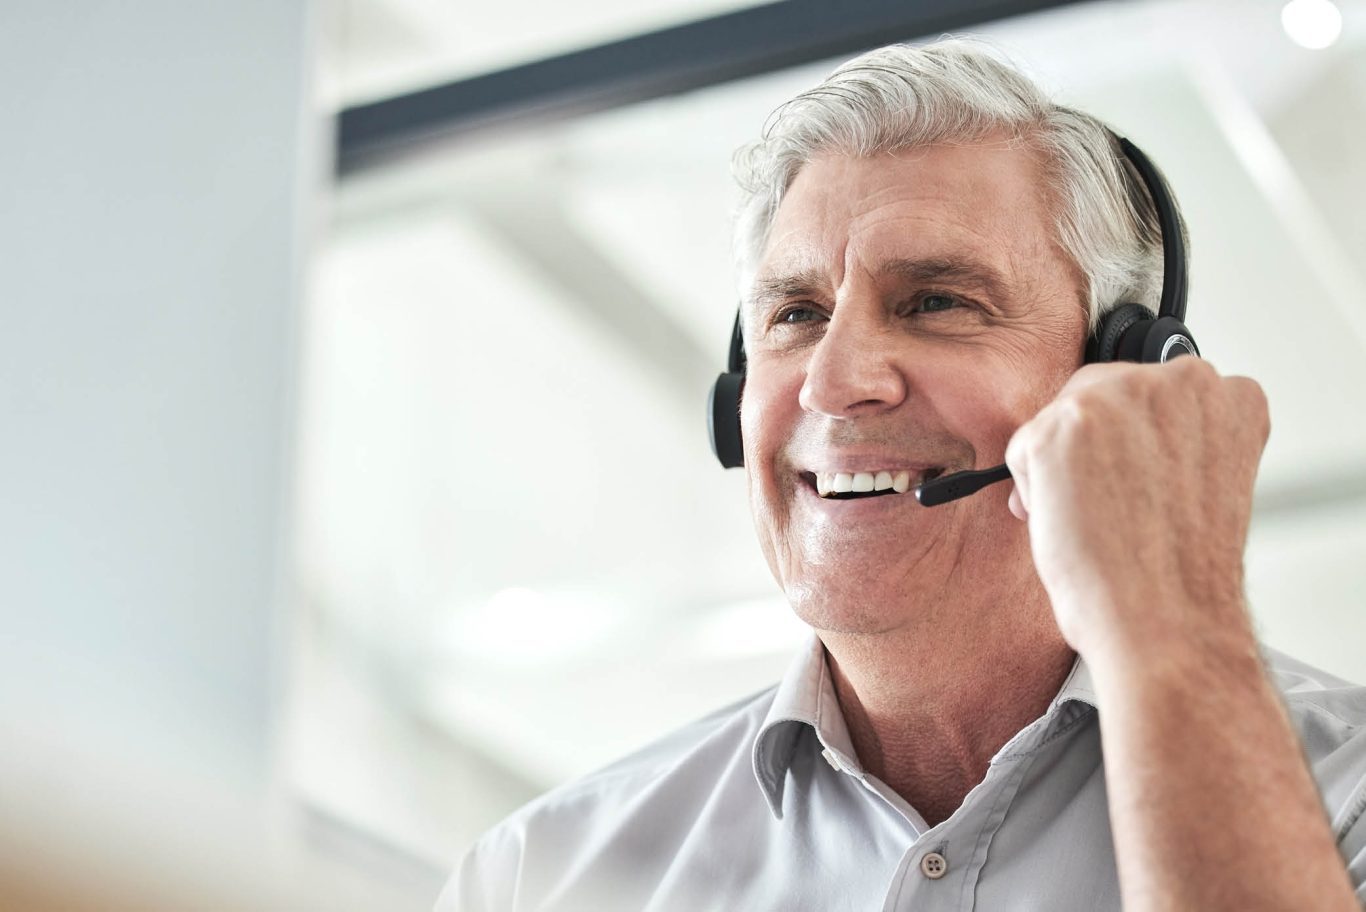 elderly call center agent having an engraining conversation